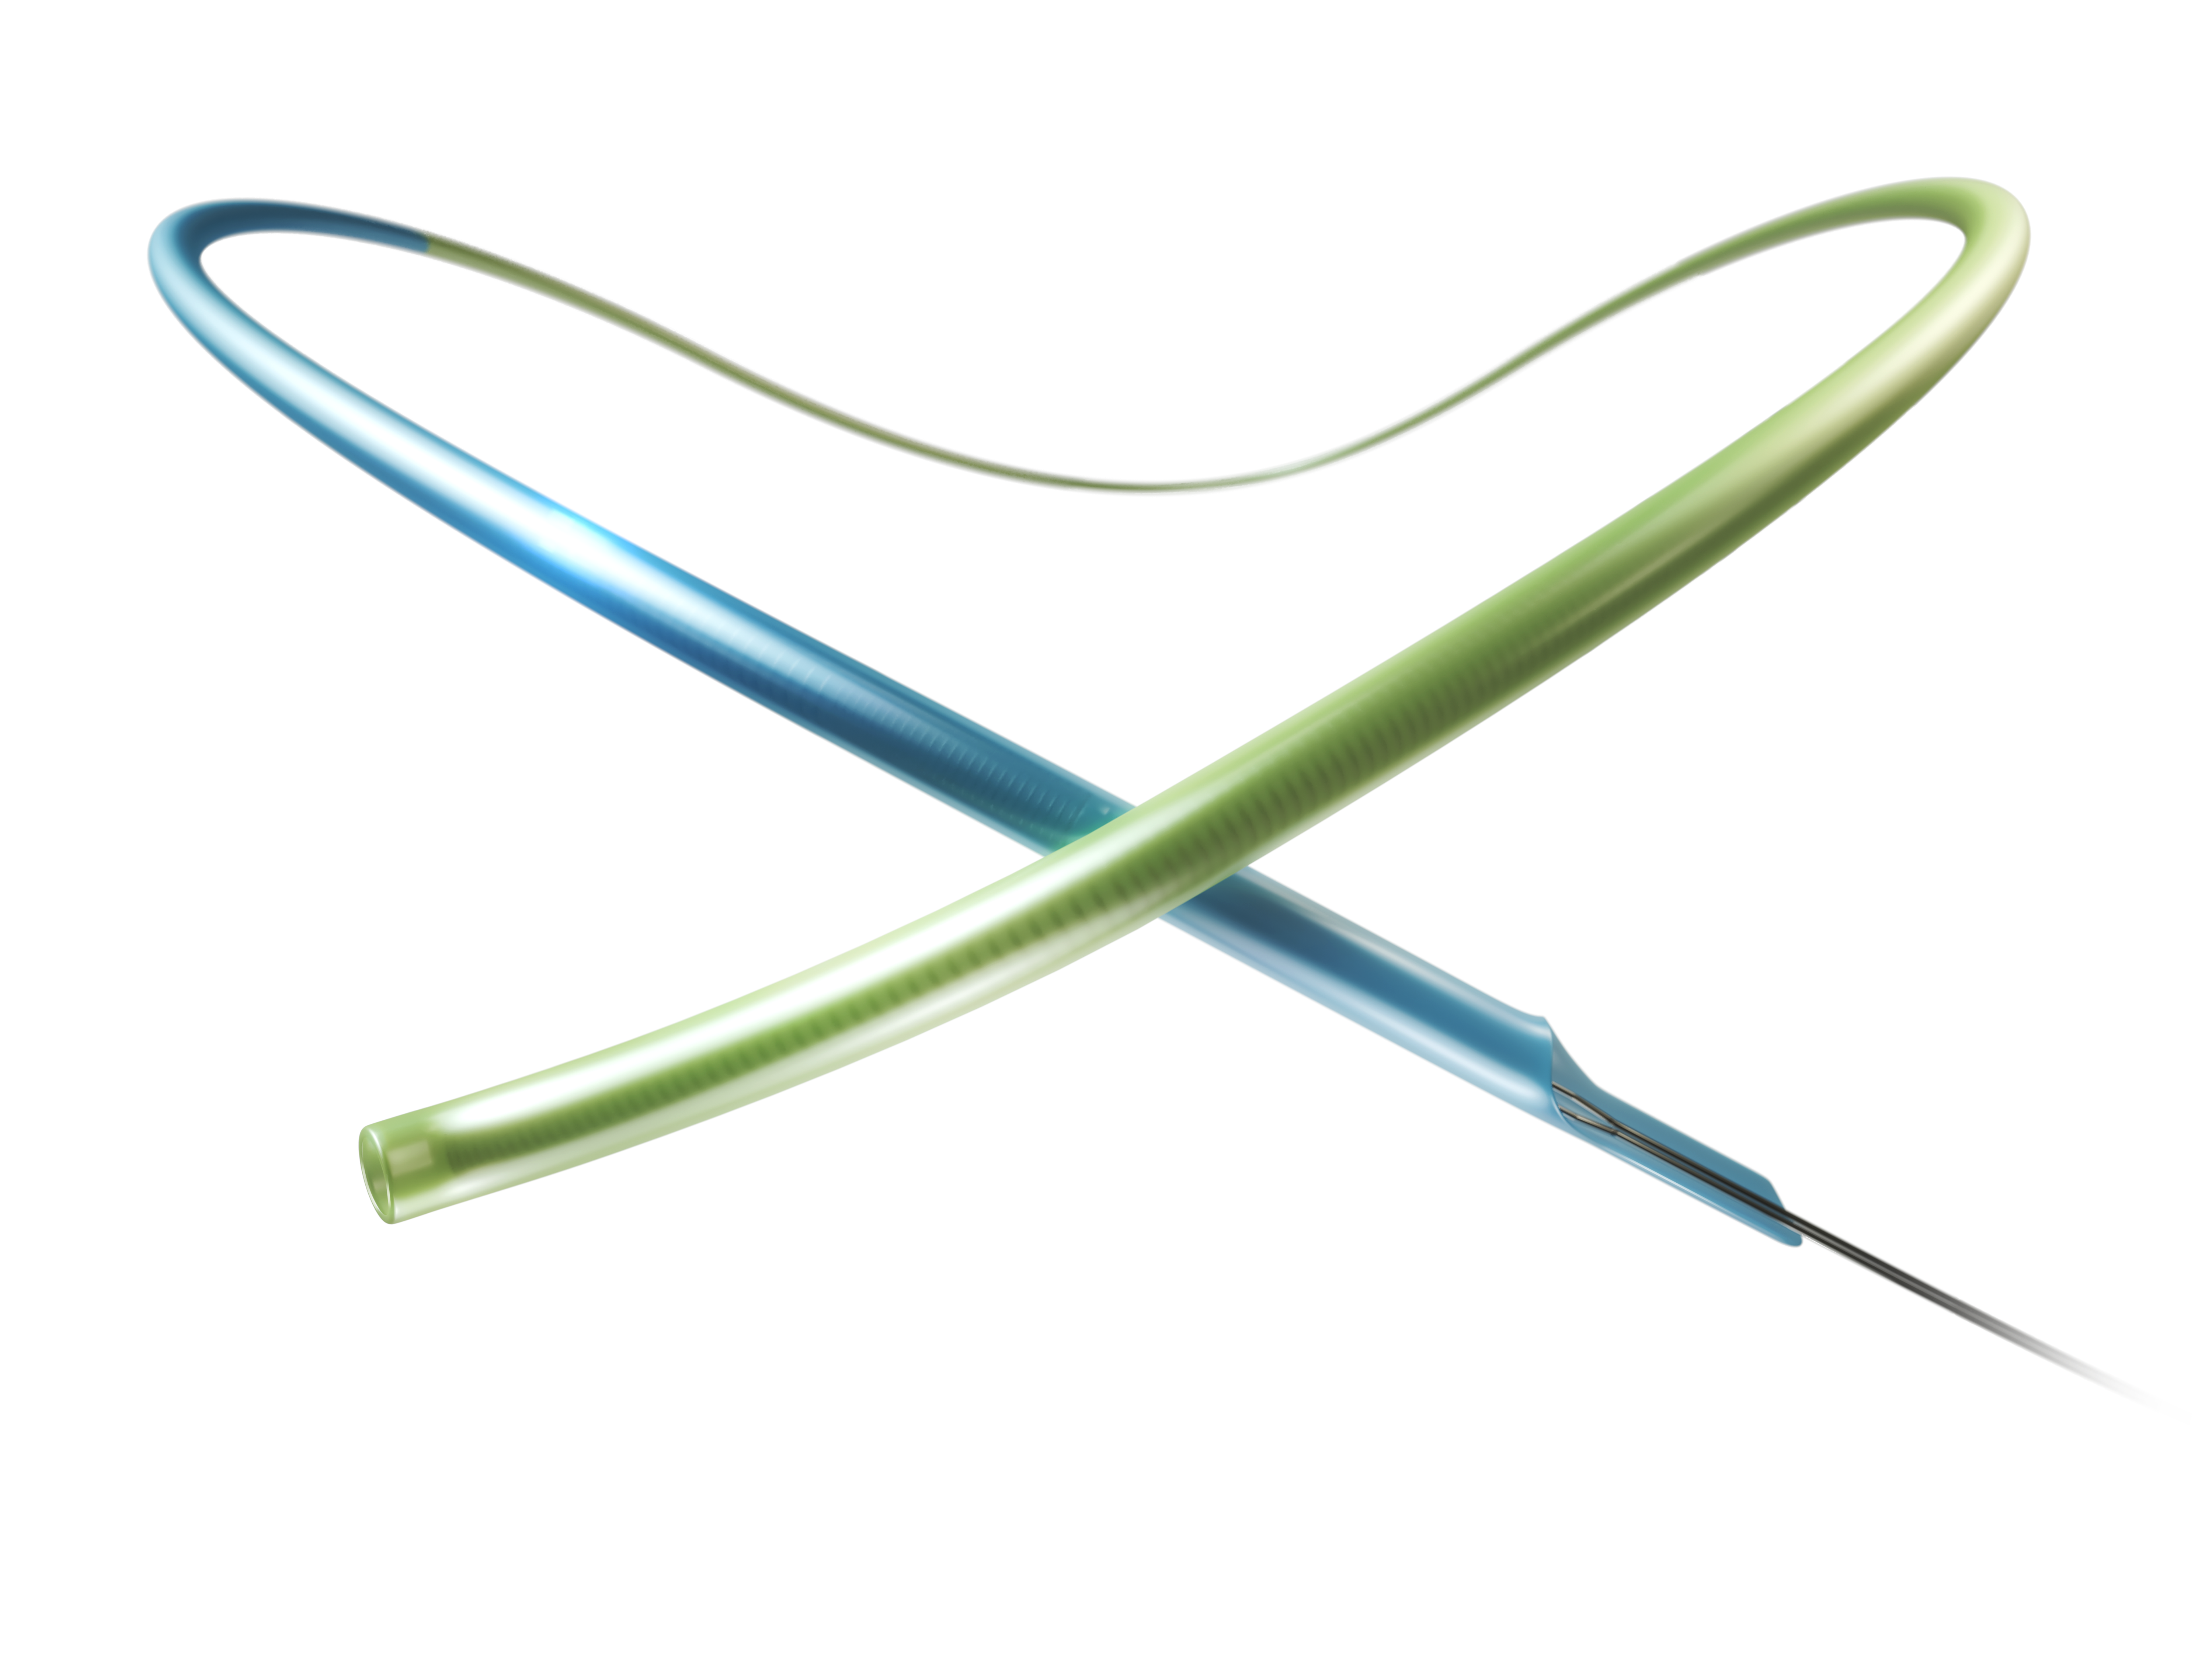 XTender guiding extension catheter